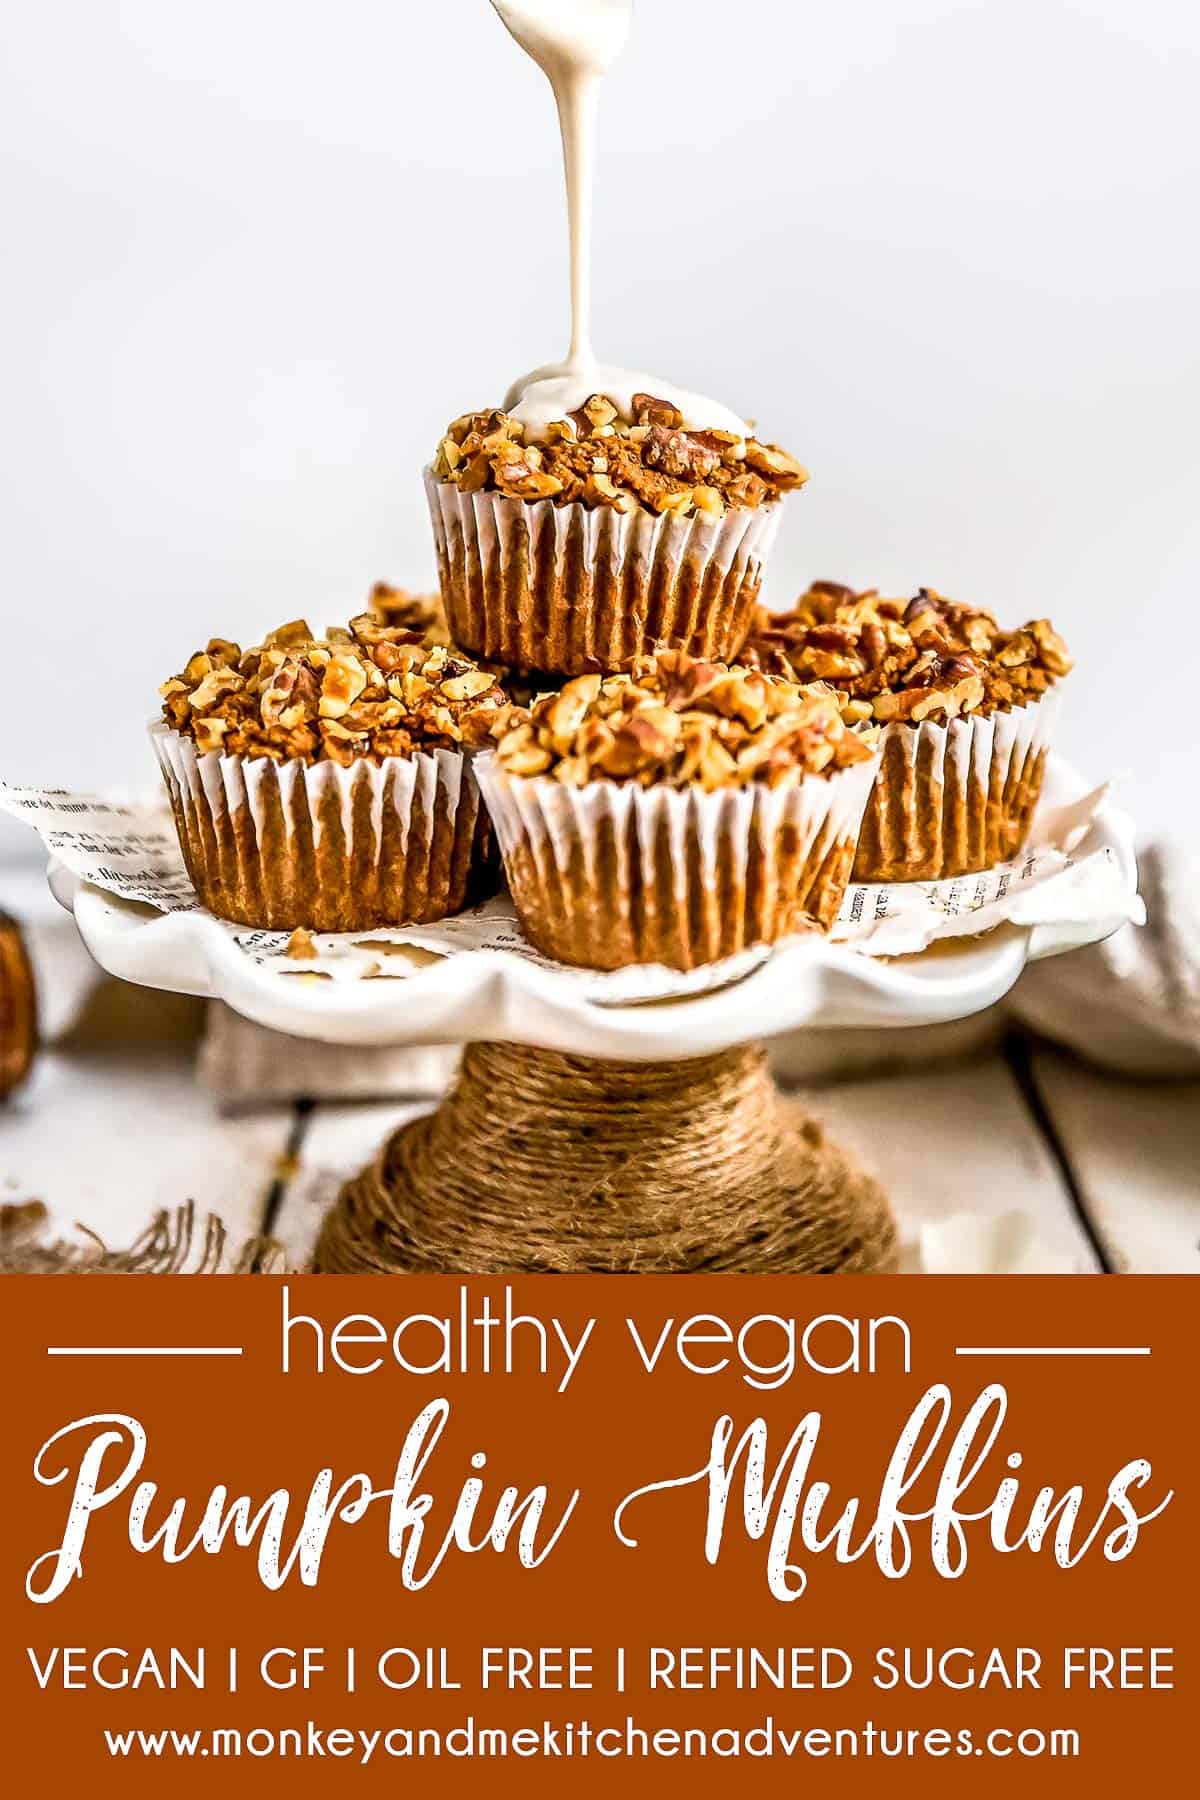 Healthy Vegan Pumpkin Muffins with text describing it.